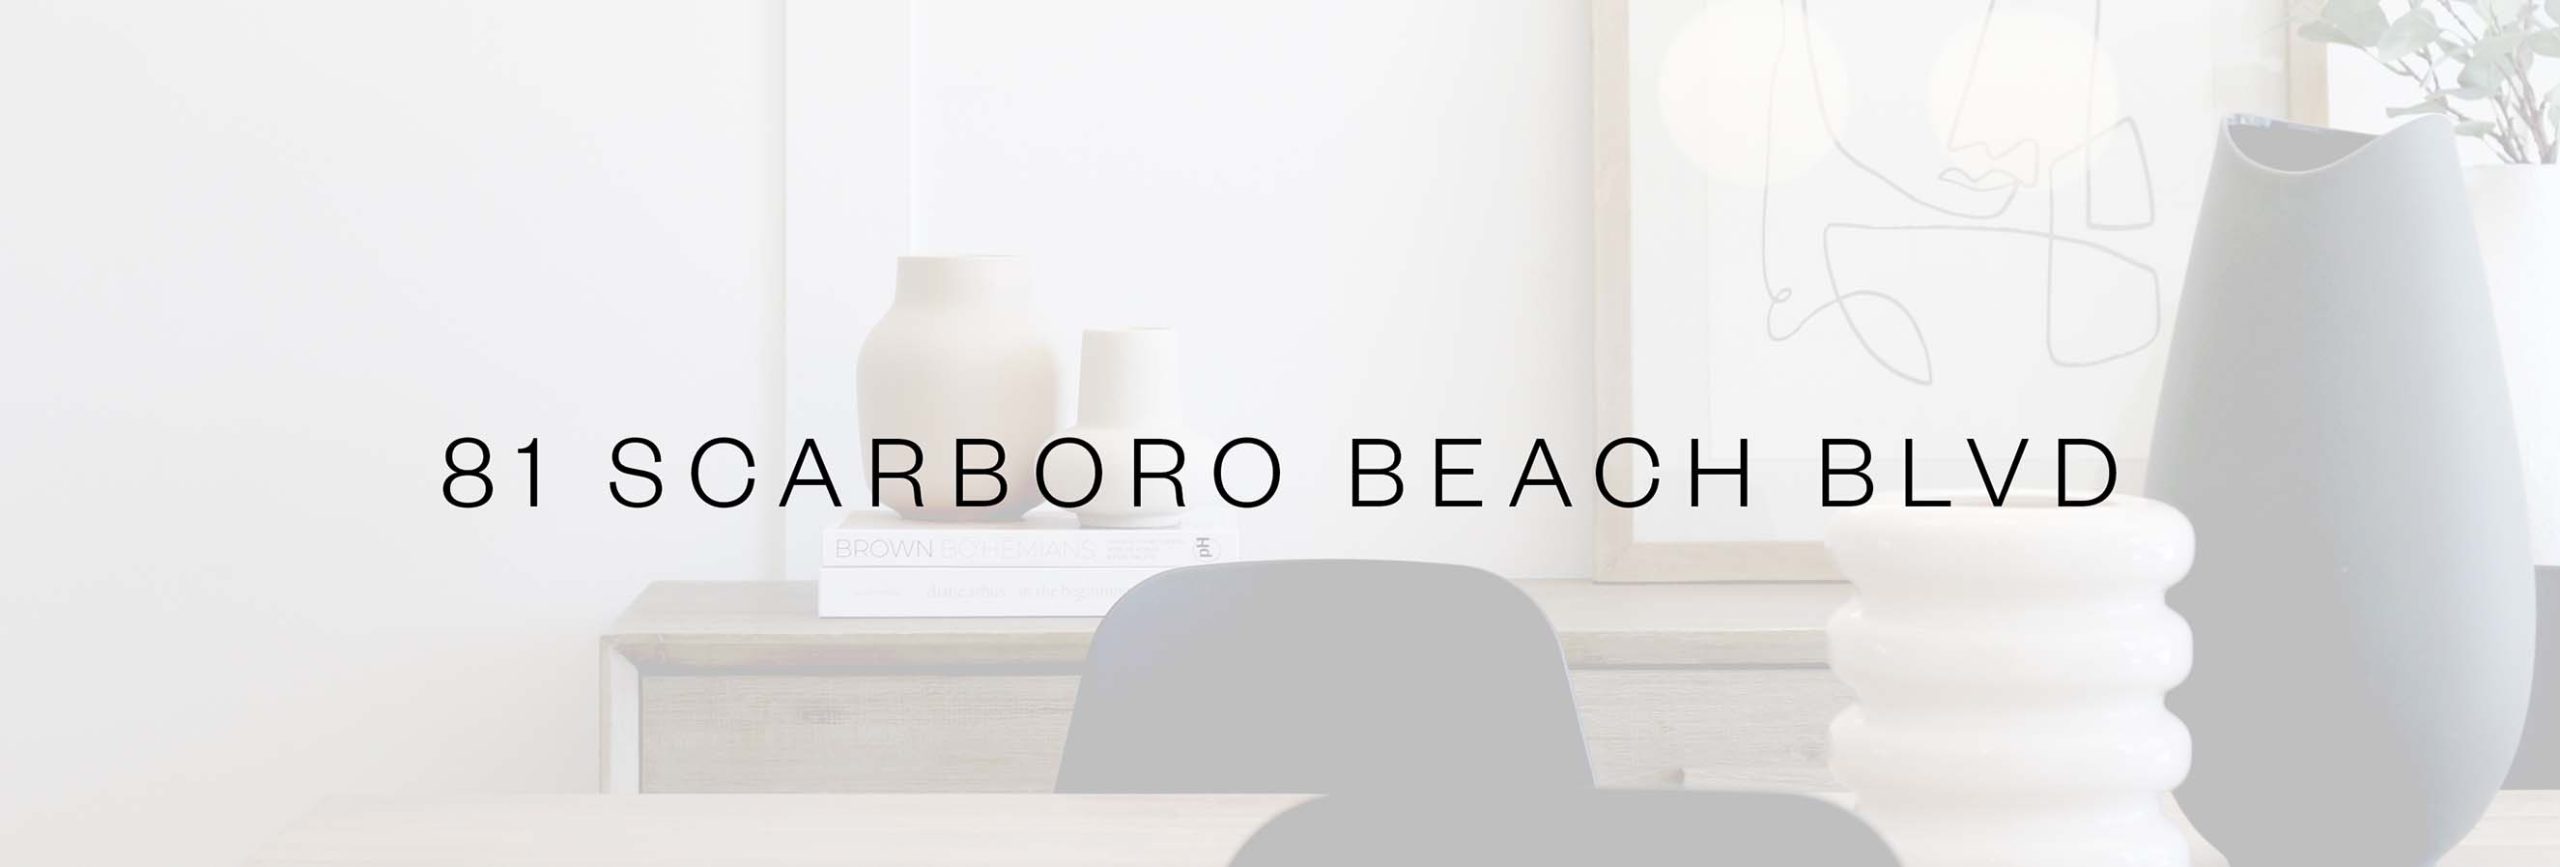 81 Scarboro Beach Property Header 2650 1